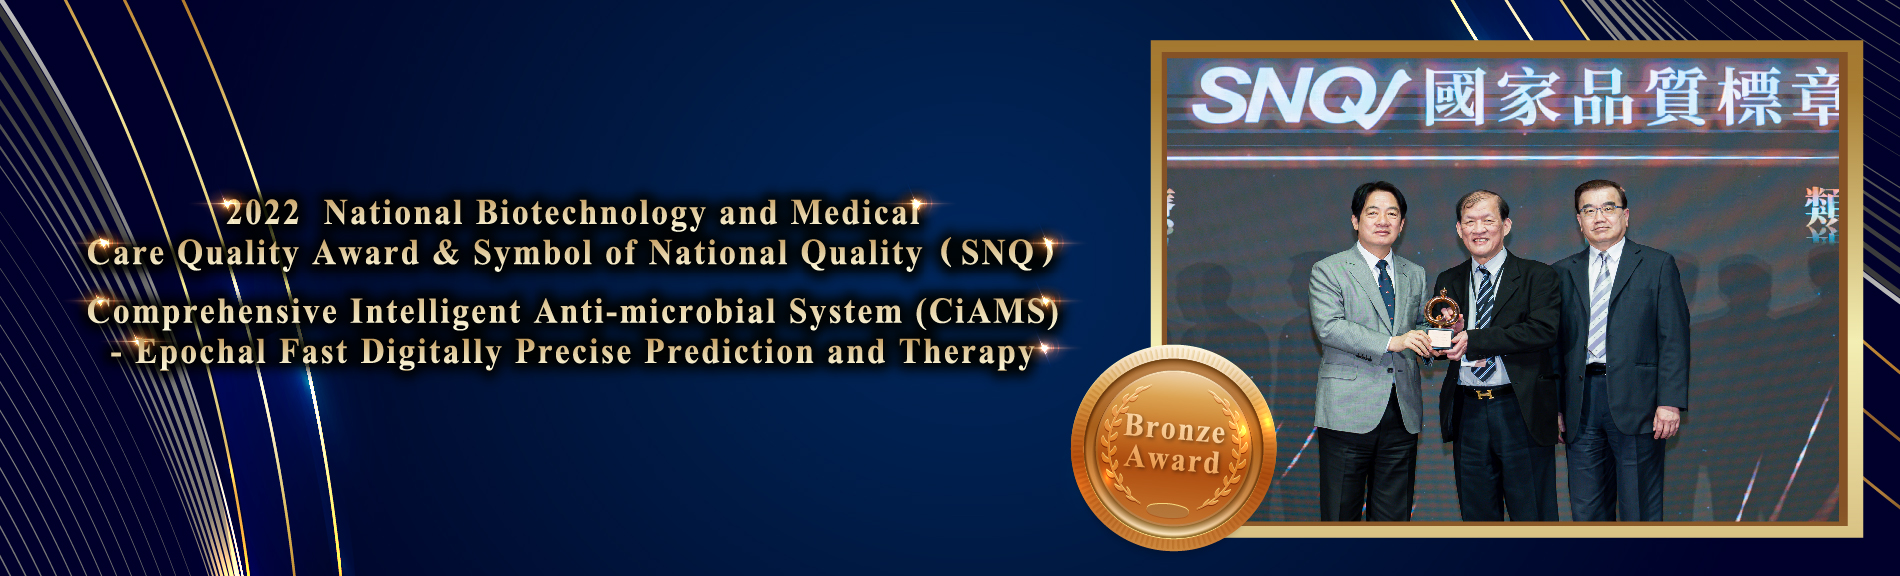 2022 SNQ Bronze Award